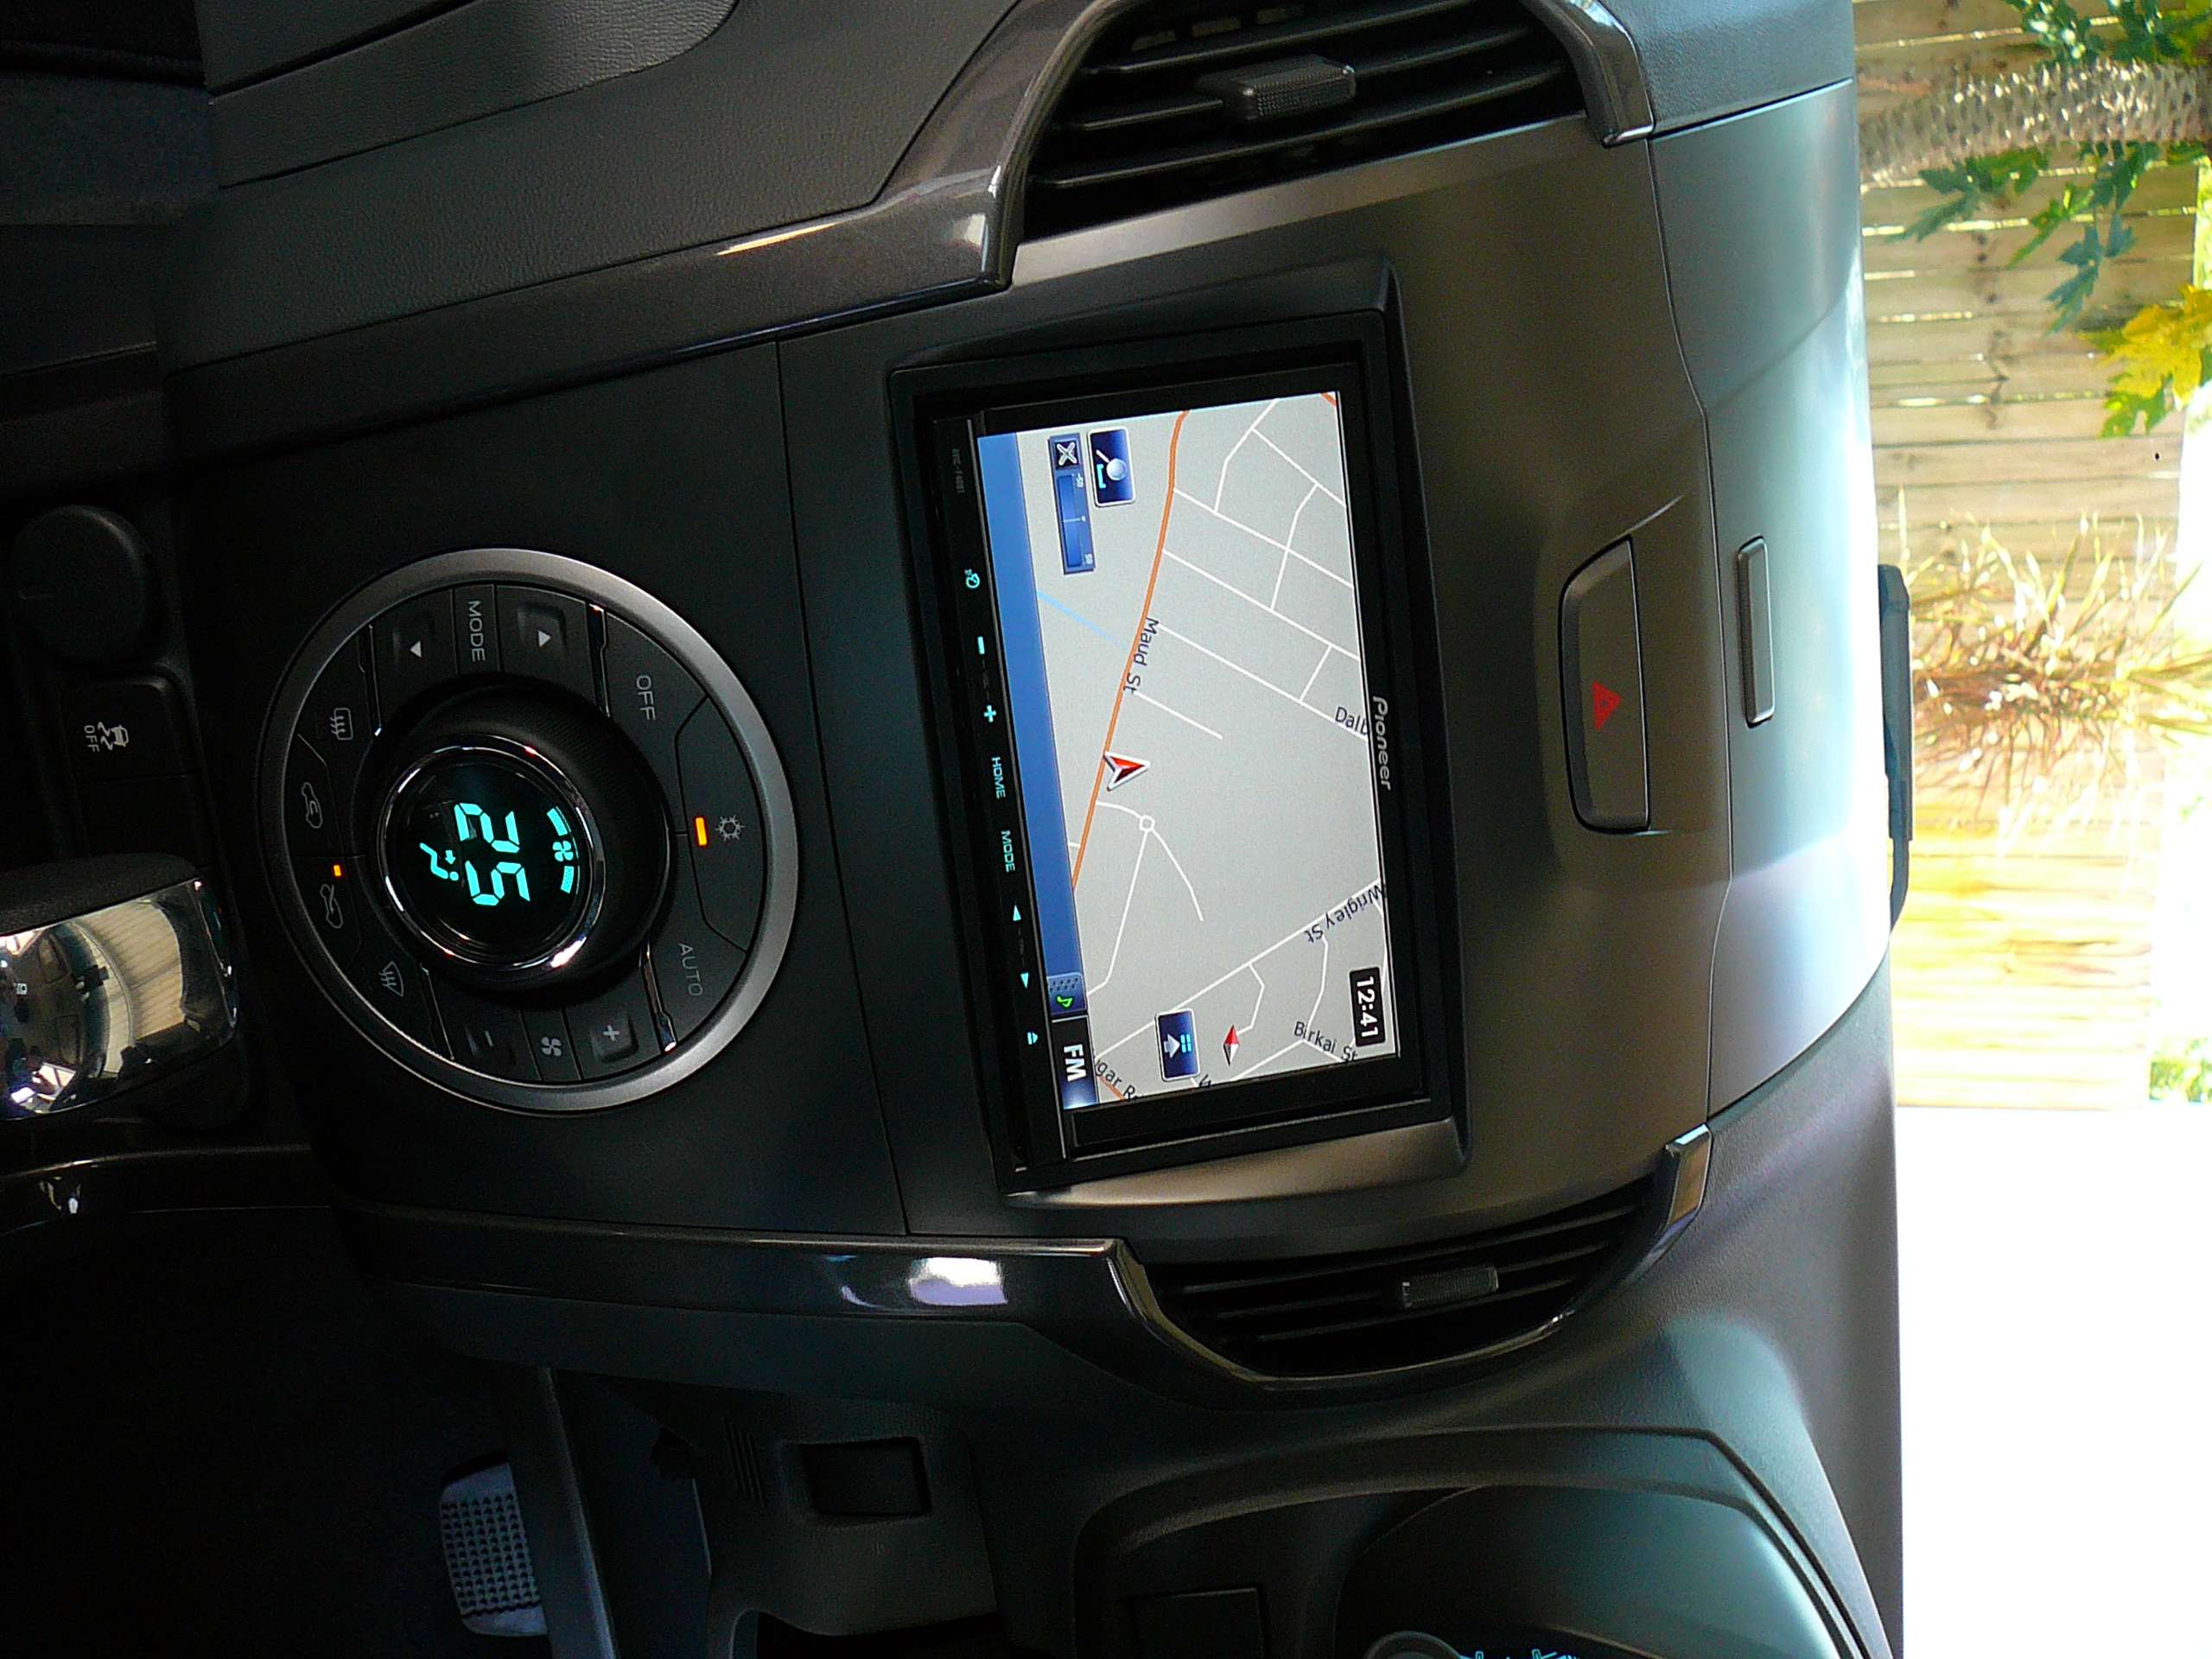 Holden Colorado 2012, Navigation and Reverse Camera